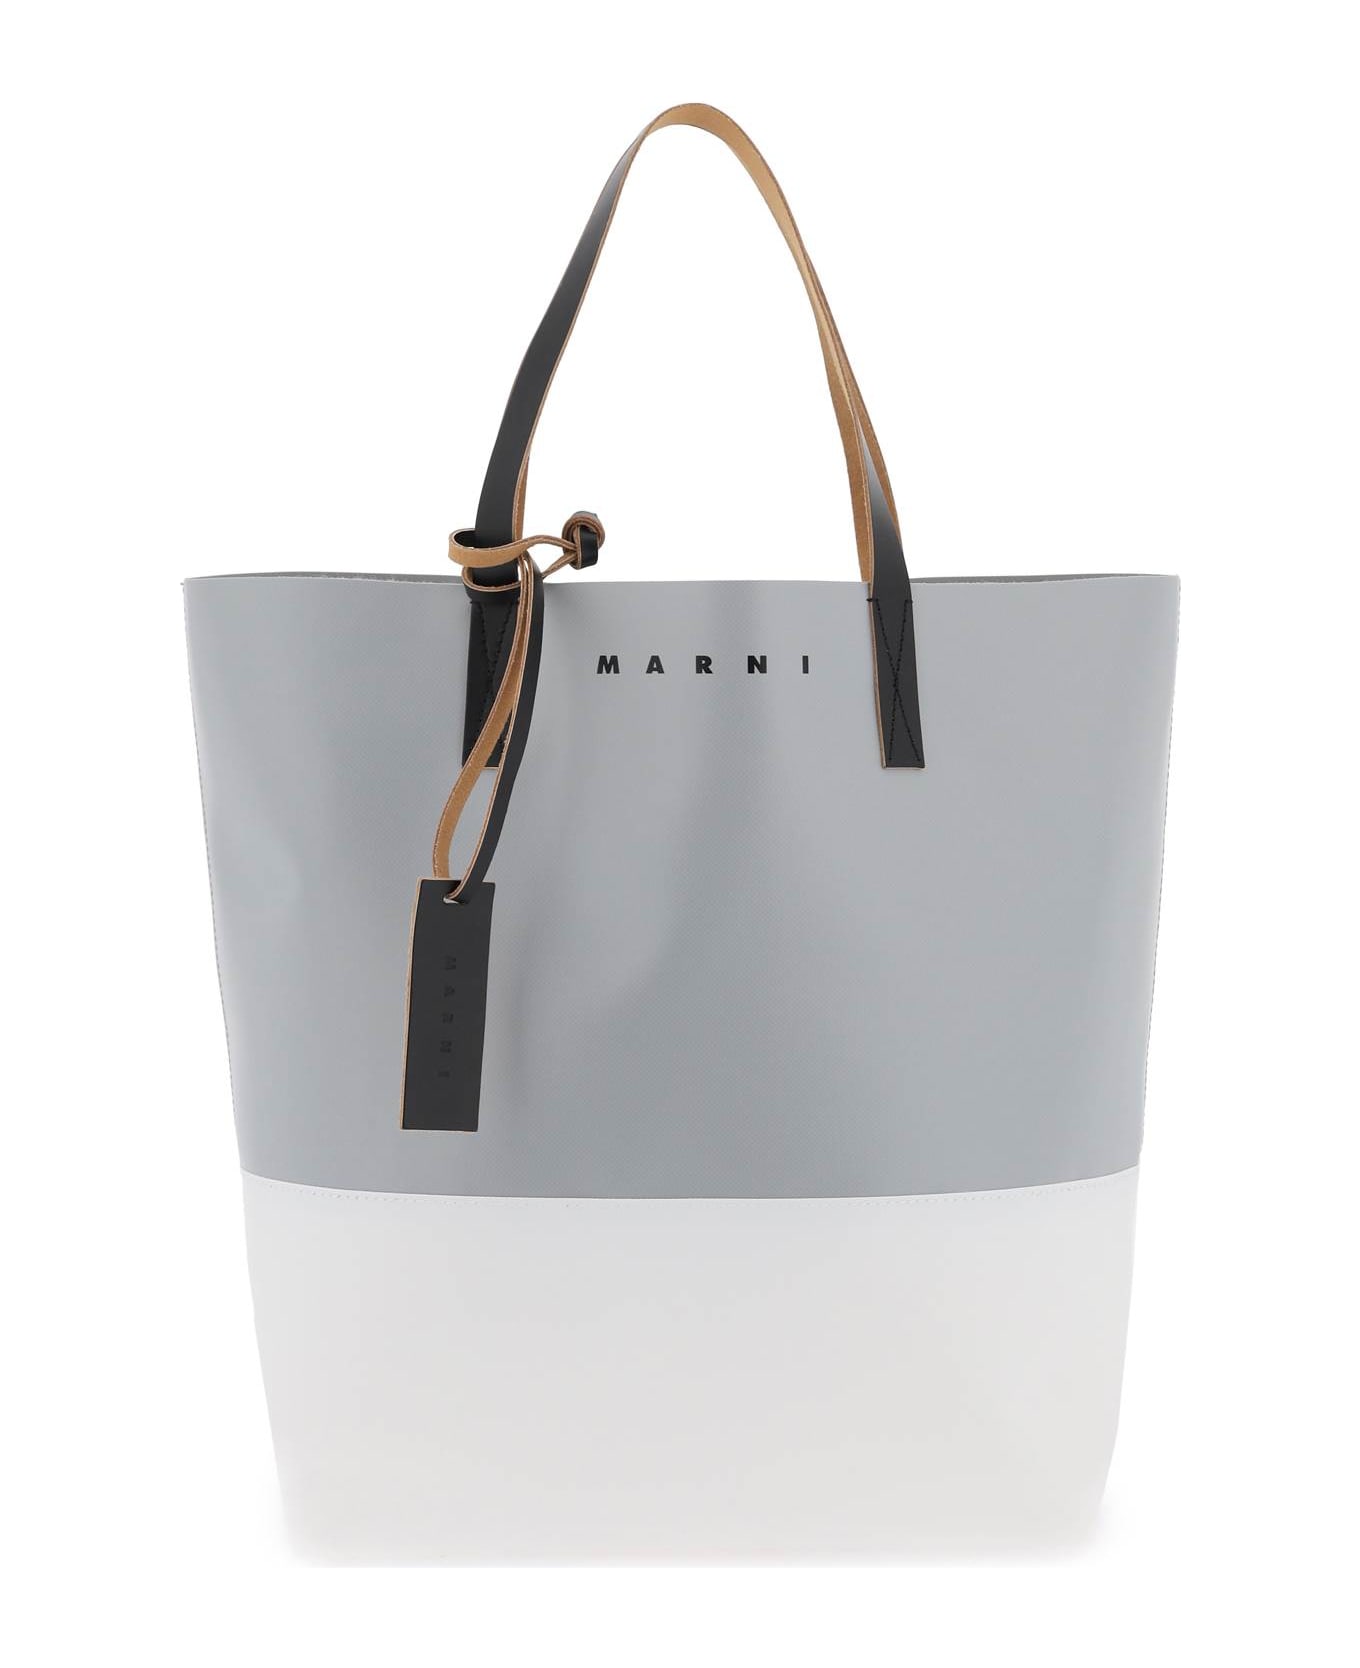 Marni Pvc Tribeca Shopping Bag - Grigio/argento